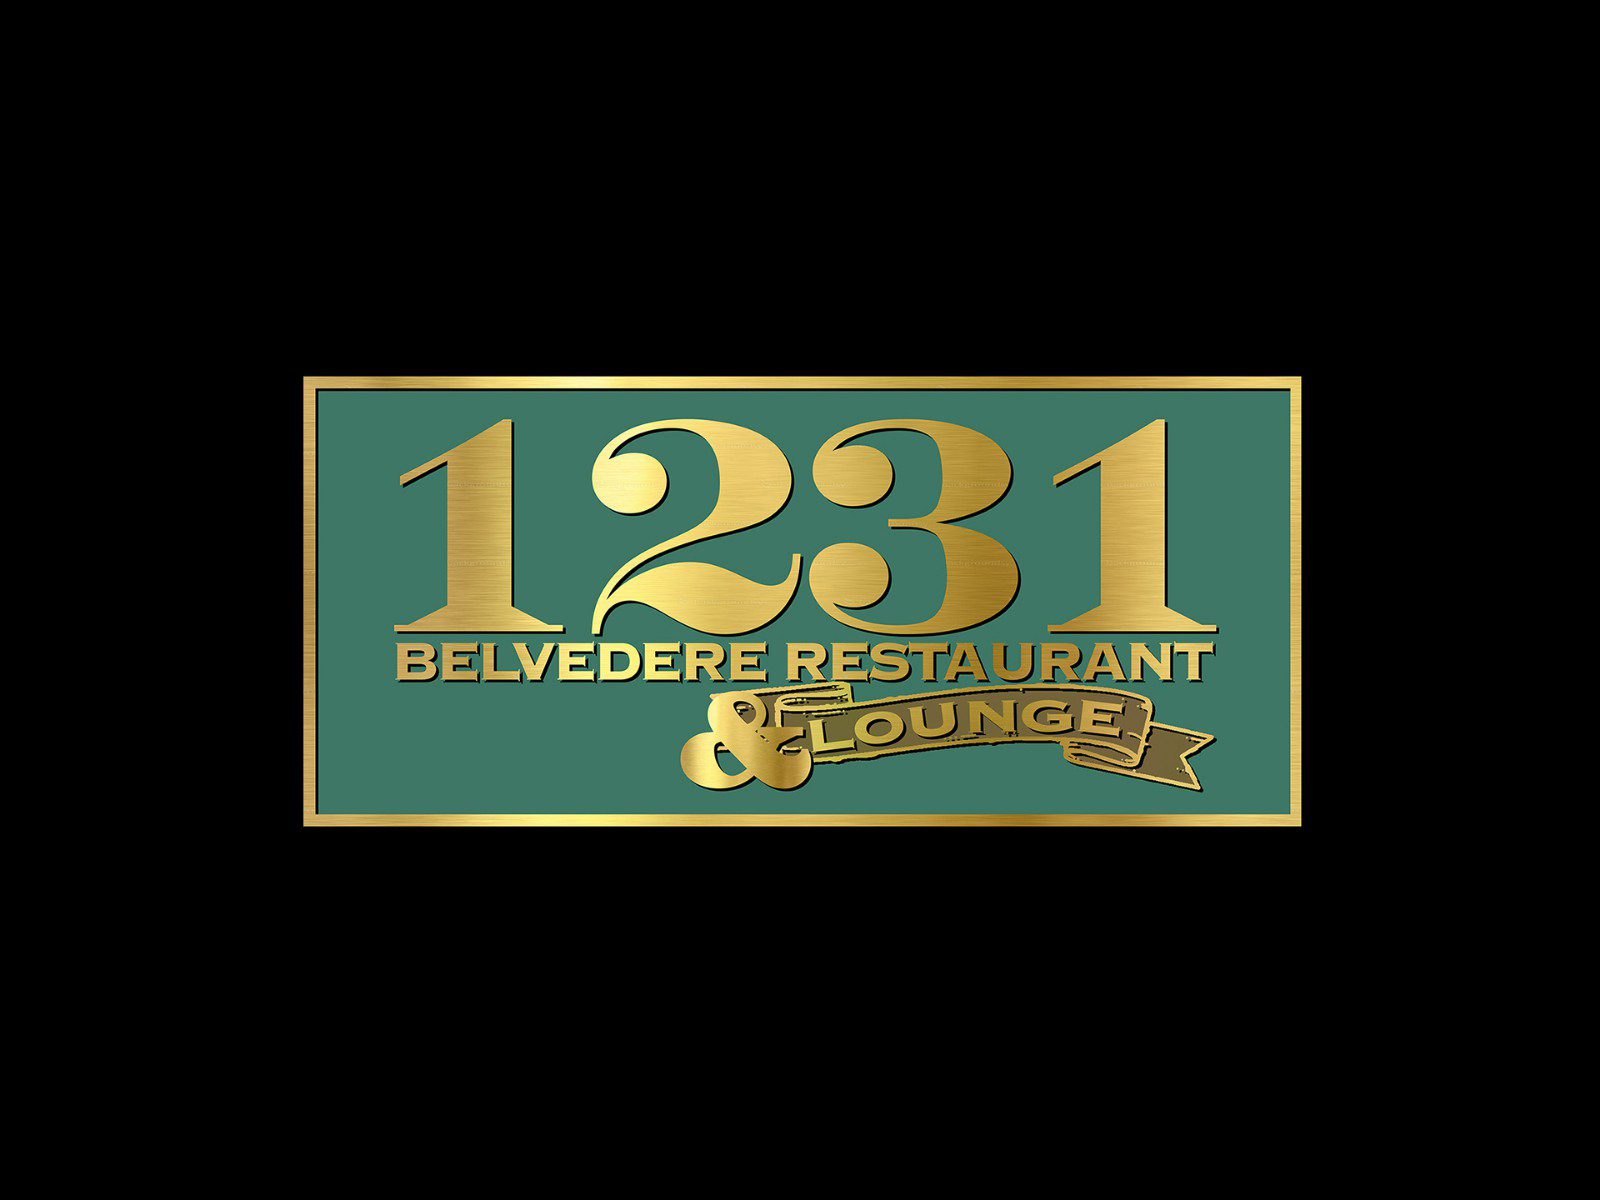 1231 Belvedere Restaurant & Lounge